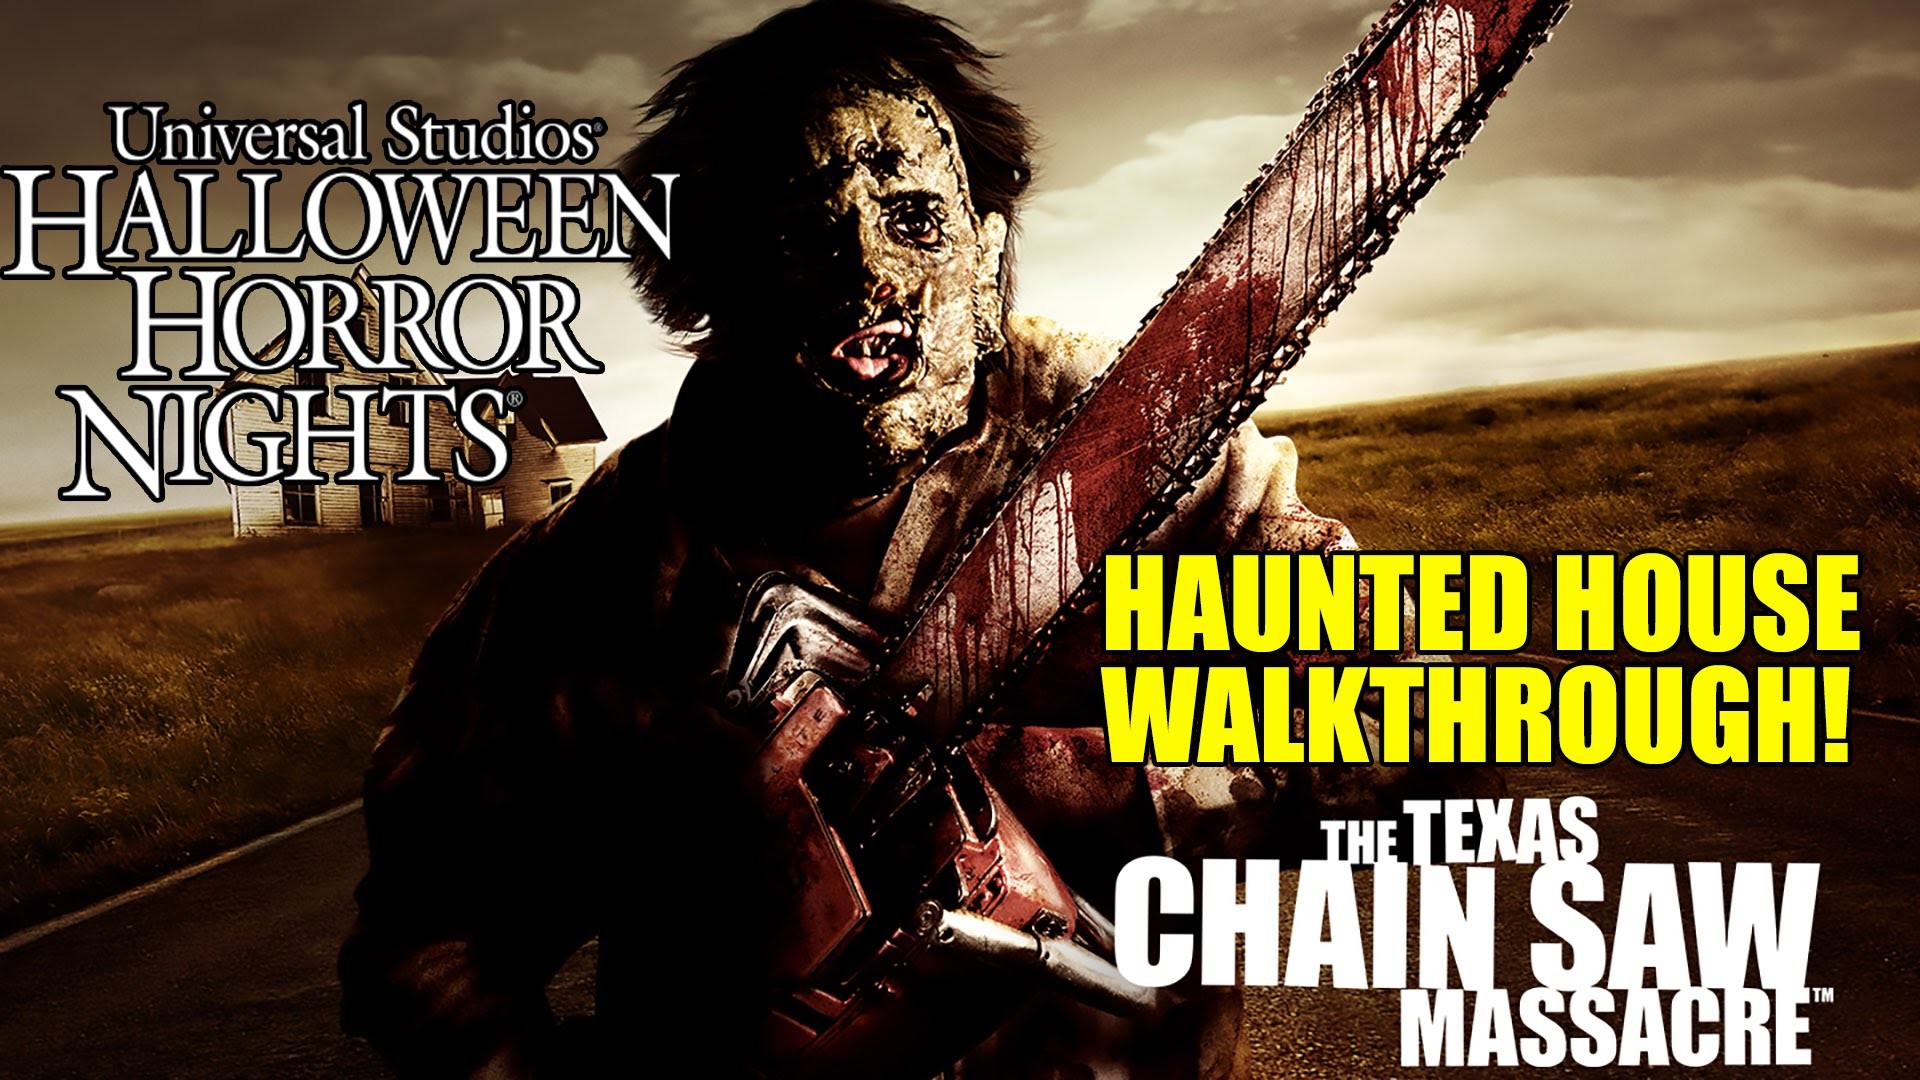 1920x1080 Texas Chainsaw Massacre Haunted House Walkthrough Halloween Horror Nights  Universal Hollywood - YouTube